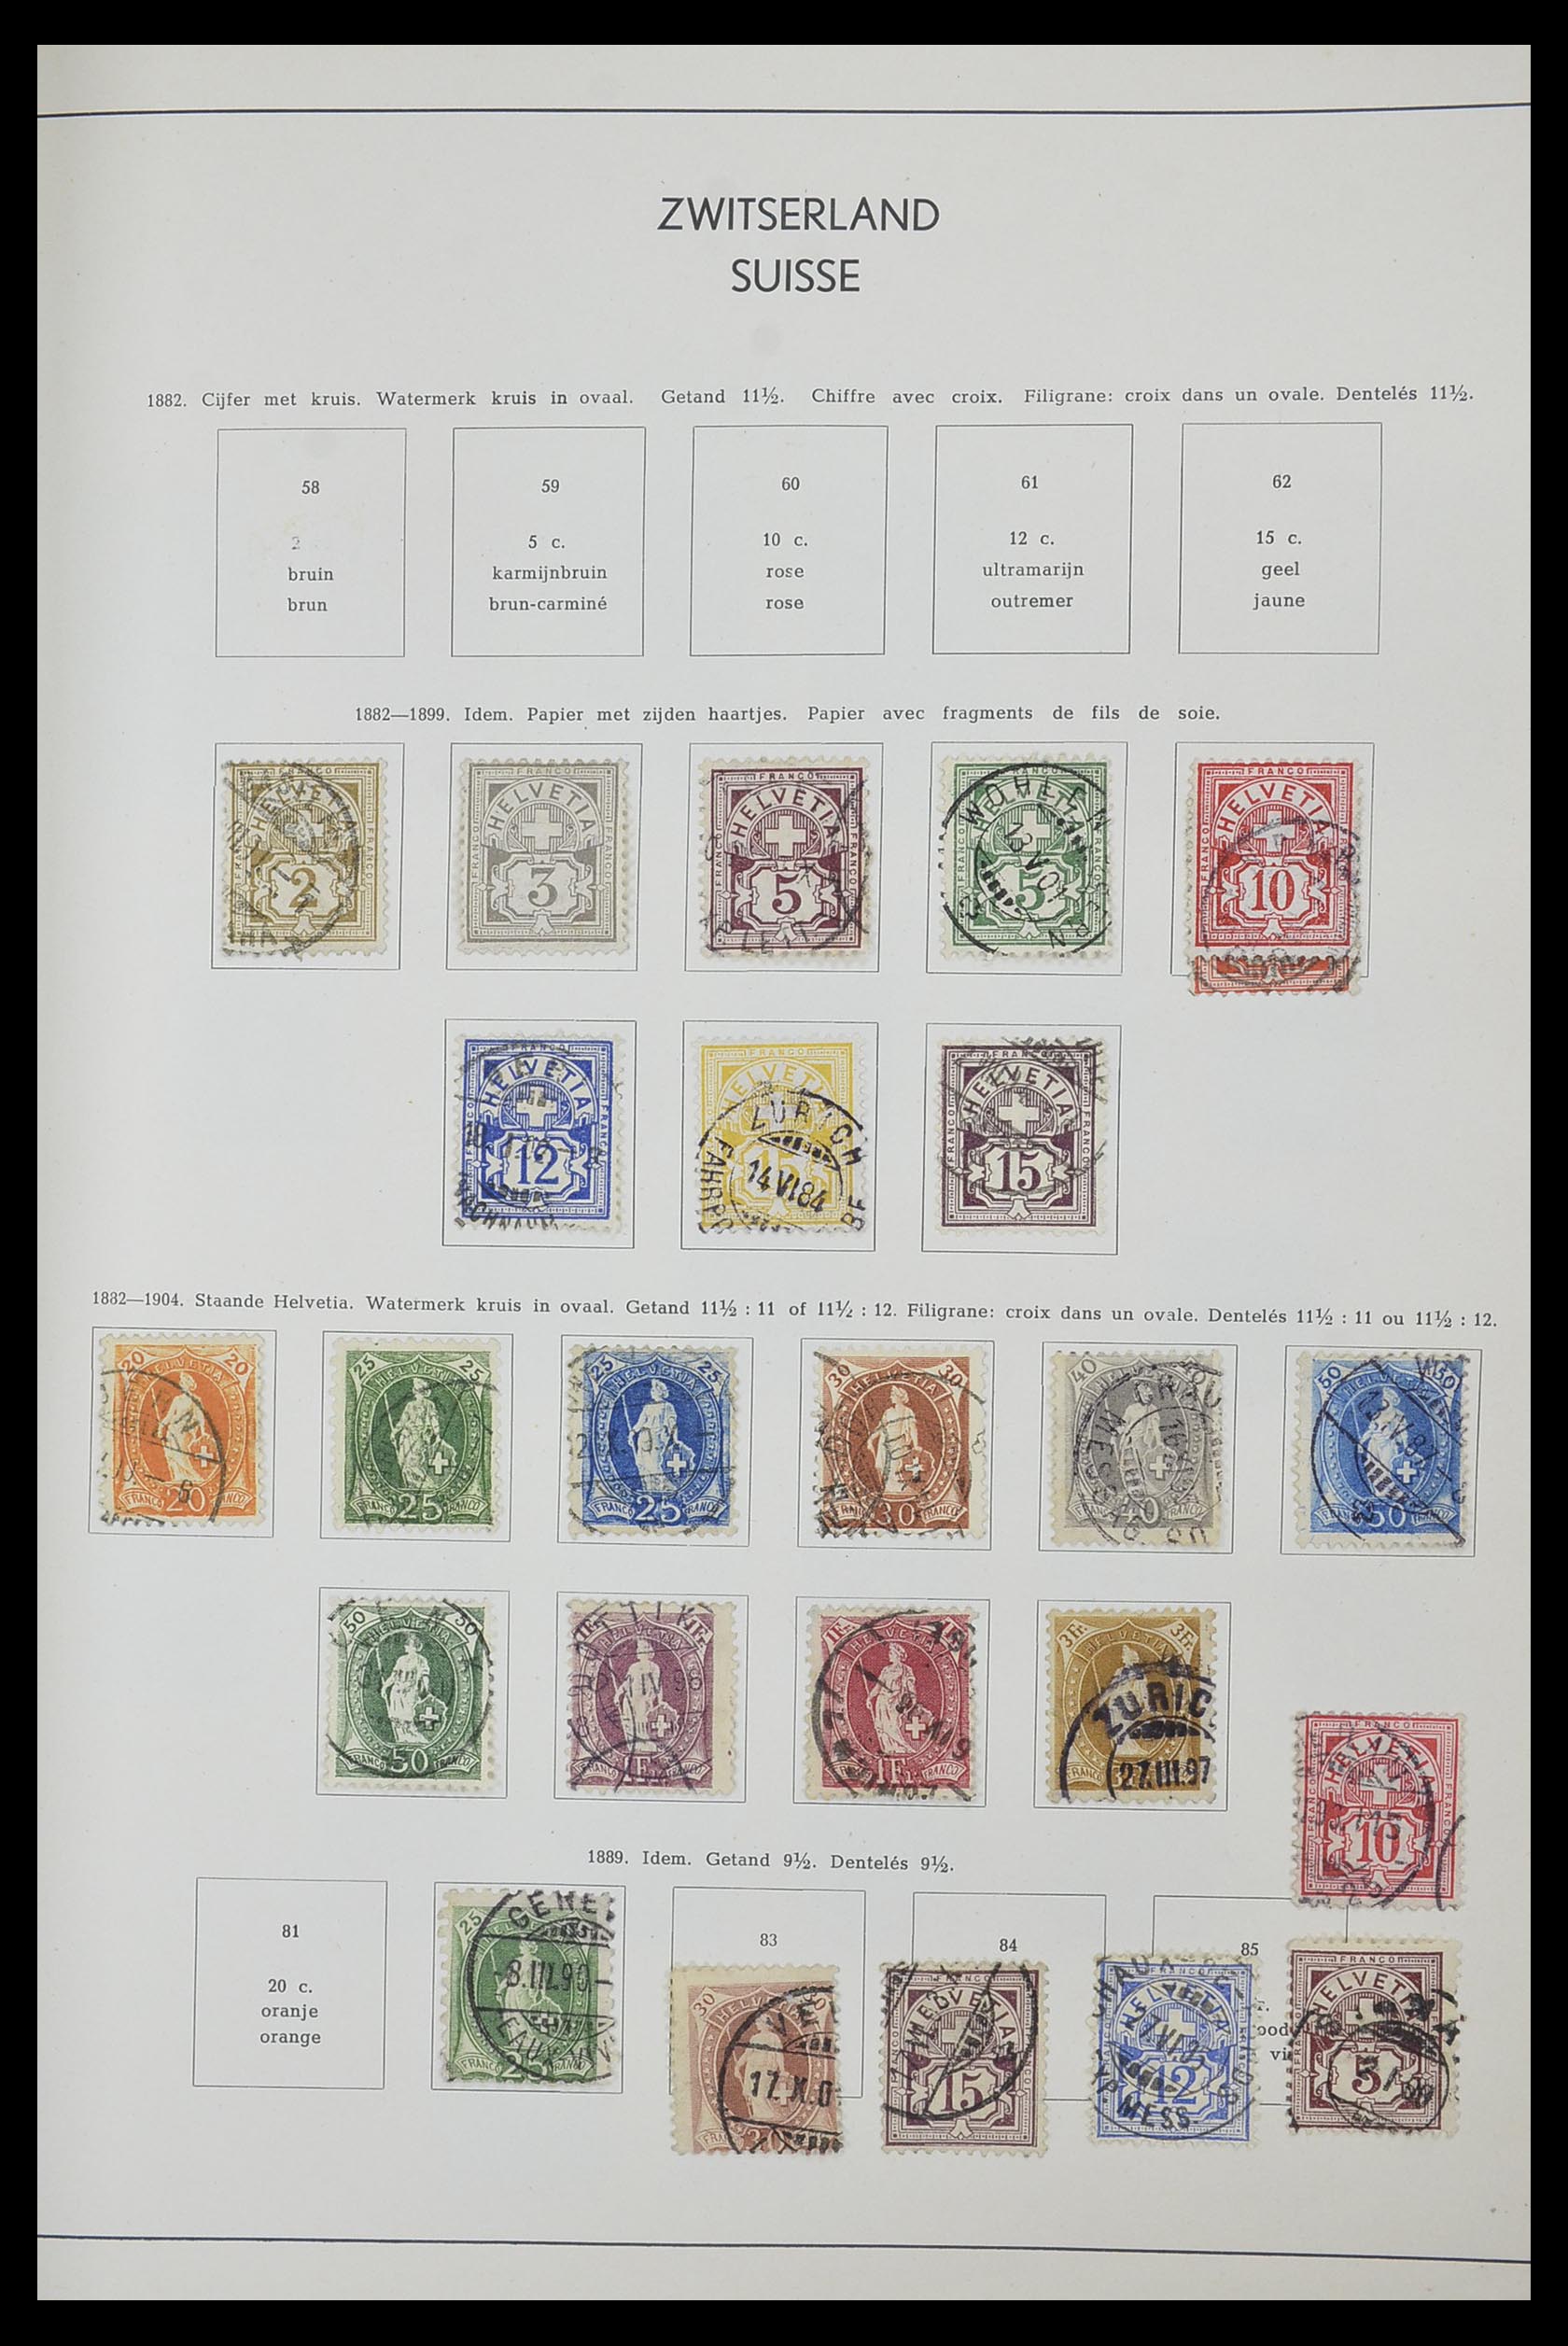 33601 004 - Stamp collection 33601 Switzerland 1854-1985.